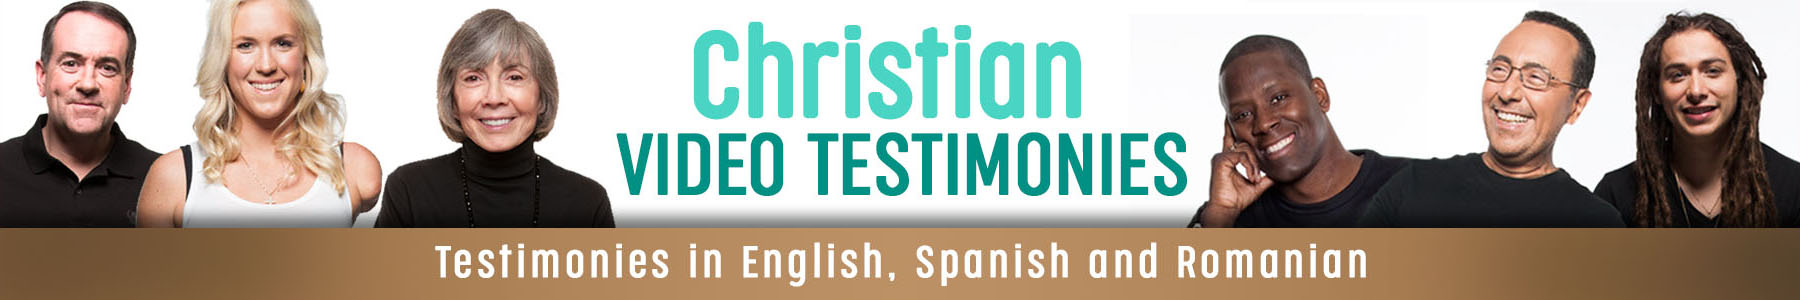 Christian Video Testimonies